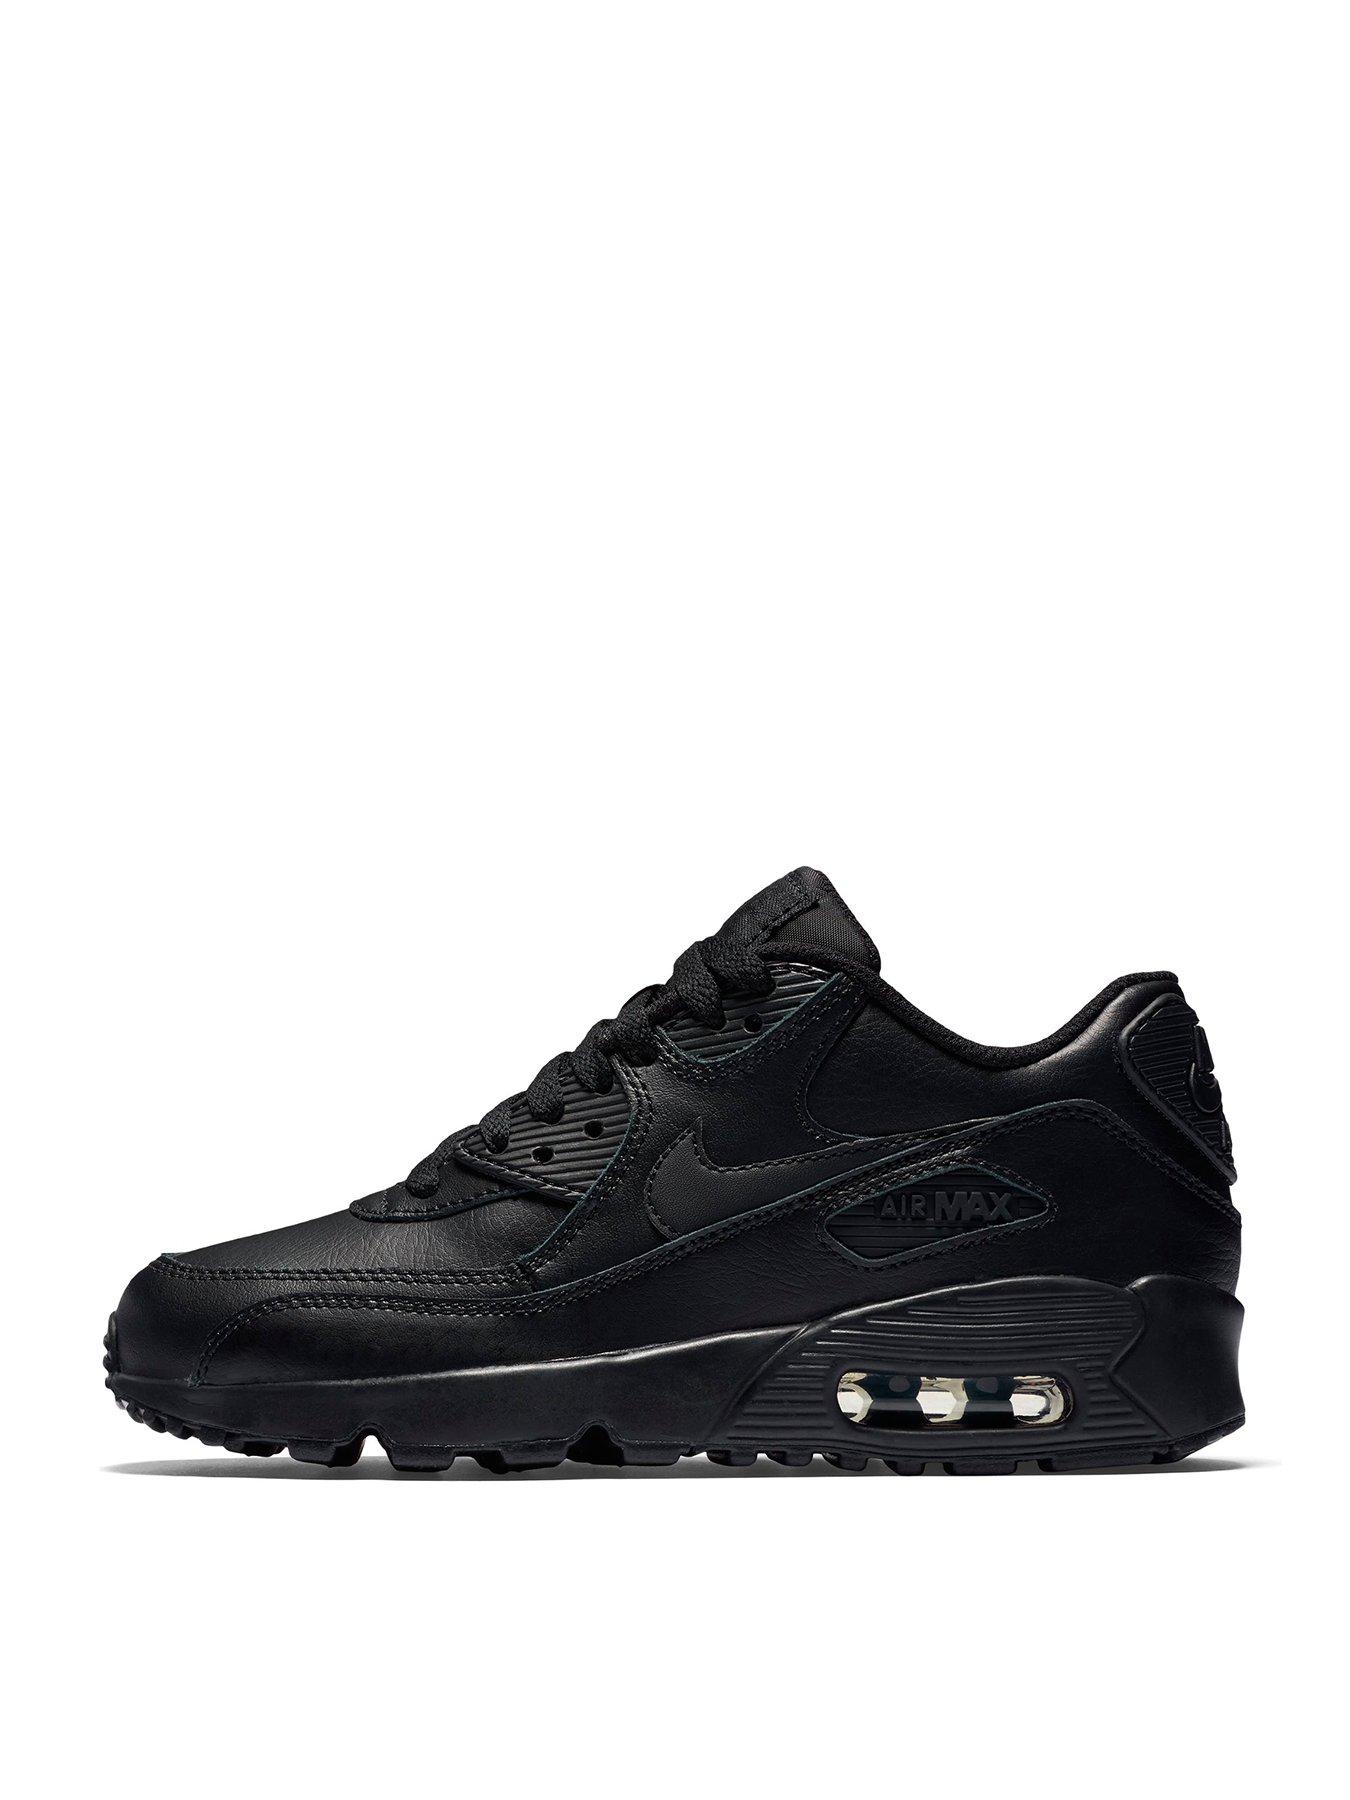 Nike Junior Air Max 90 Leather - Black | littlewoodsireland.ie